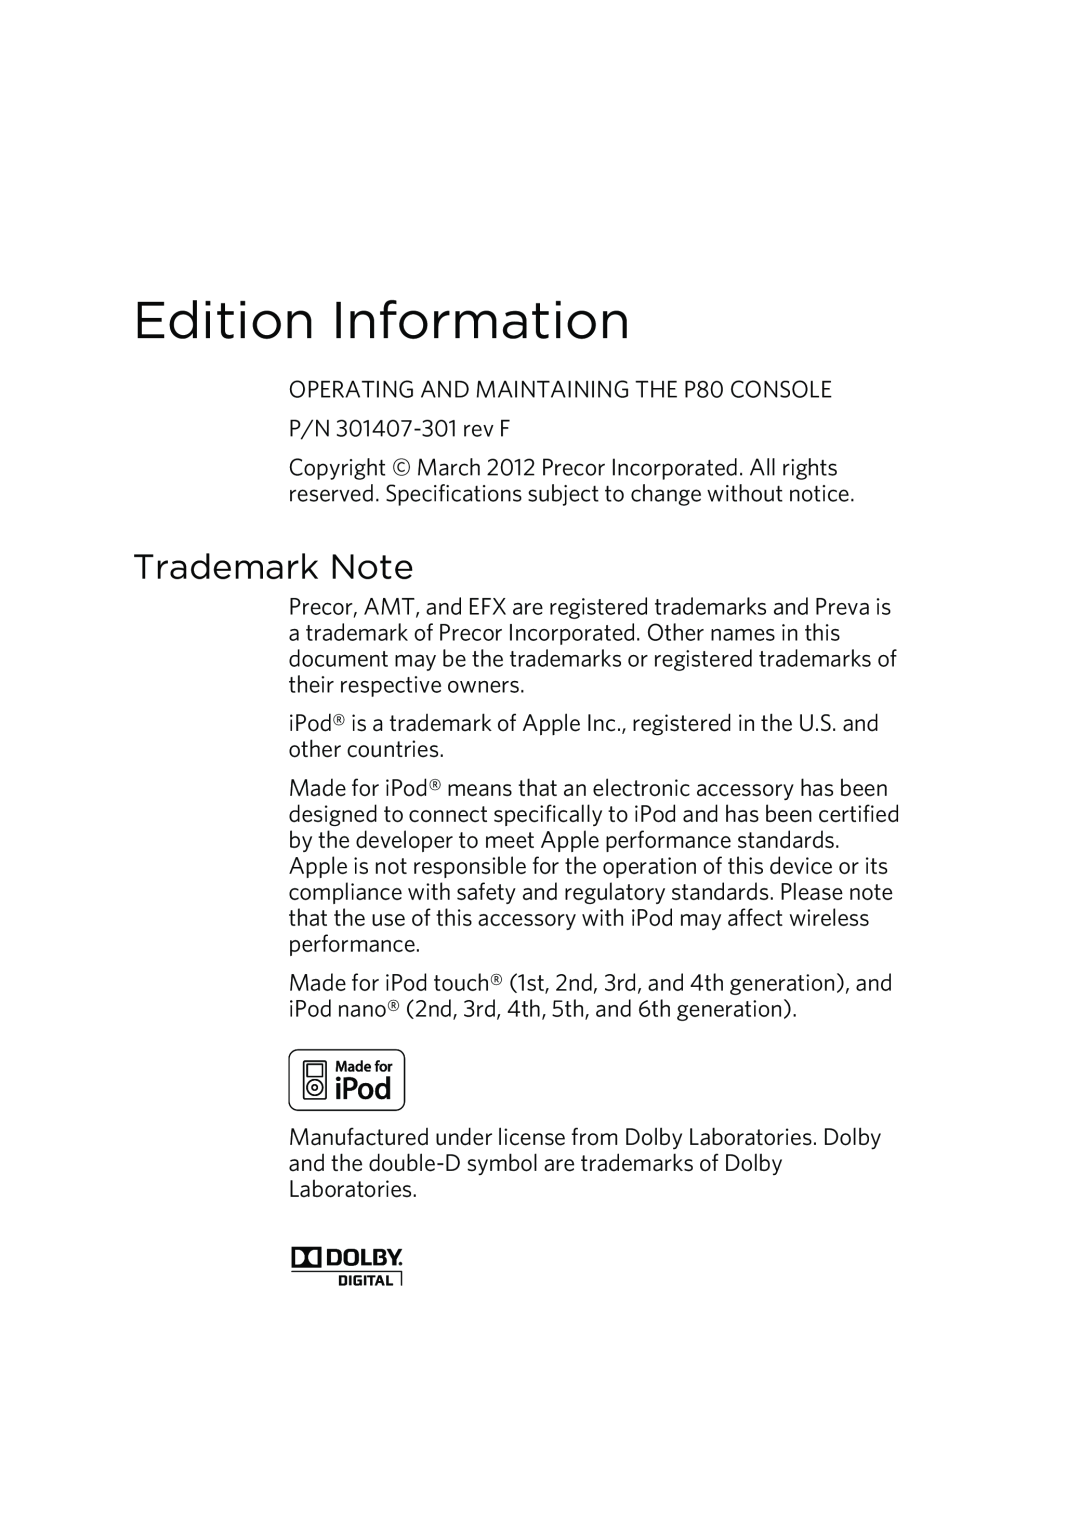 Precor P80 manual Edition Information, Trademark Note 